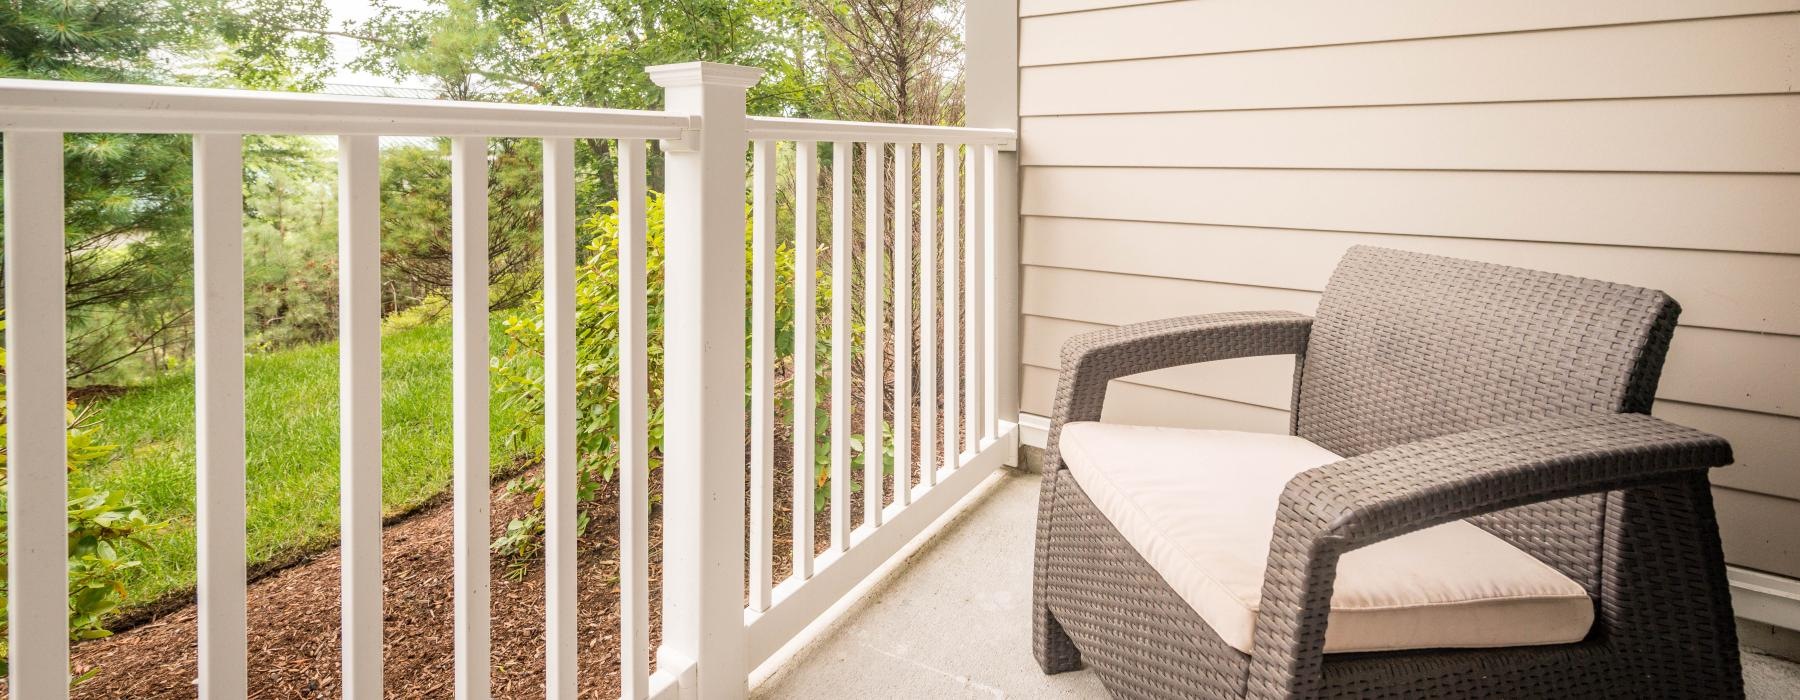 a white porch with a white railing